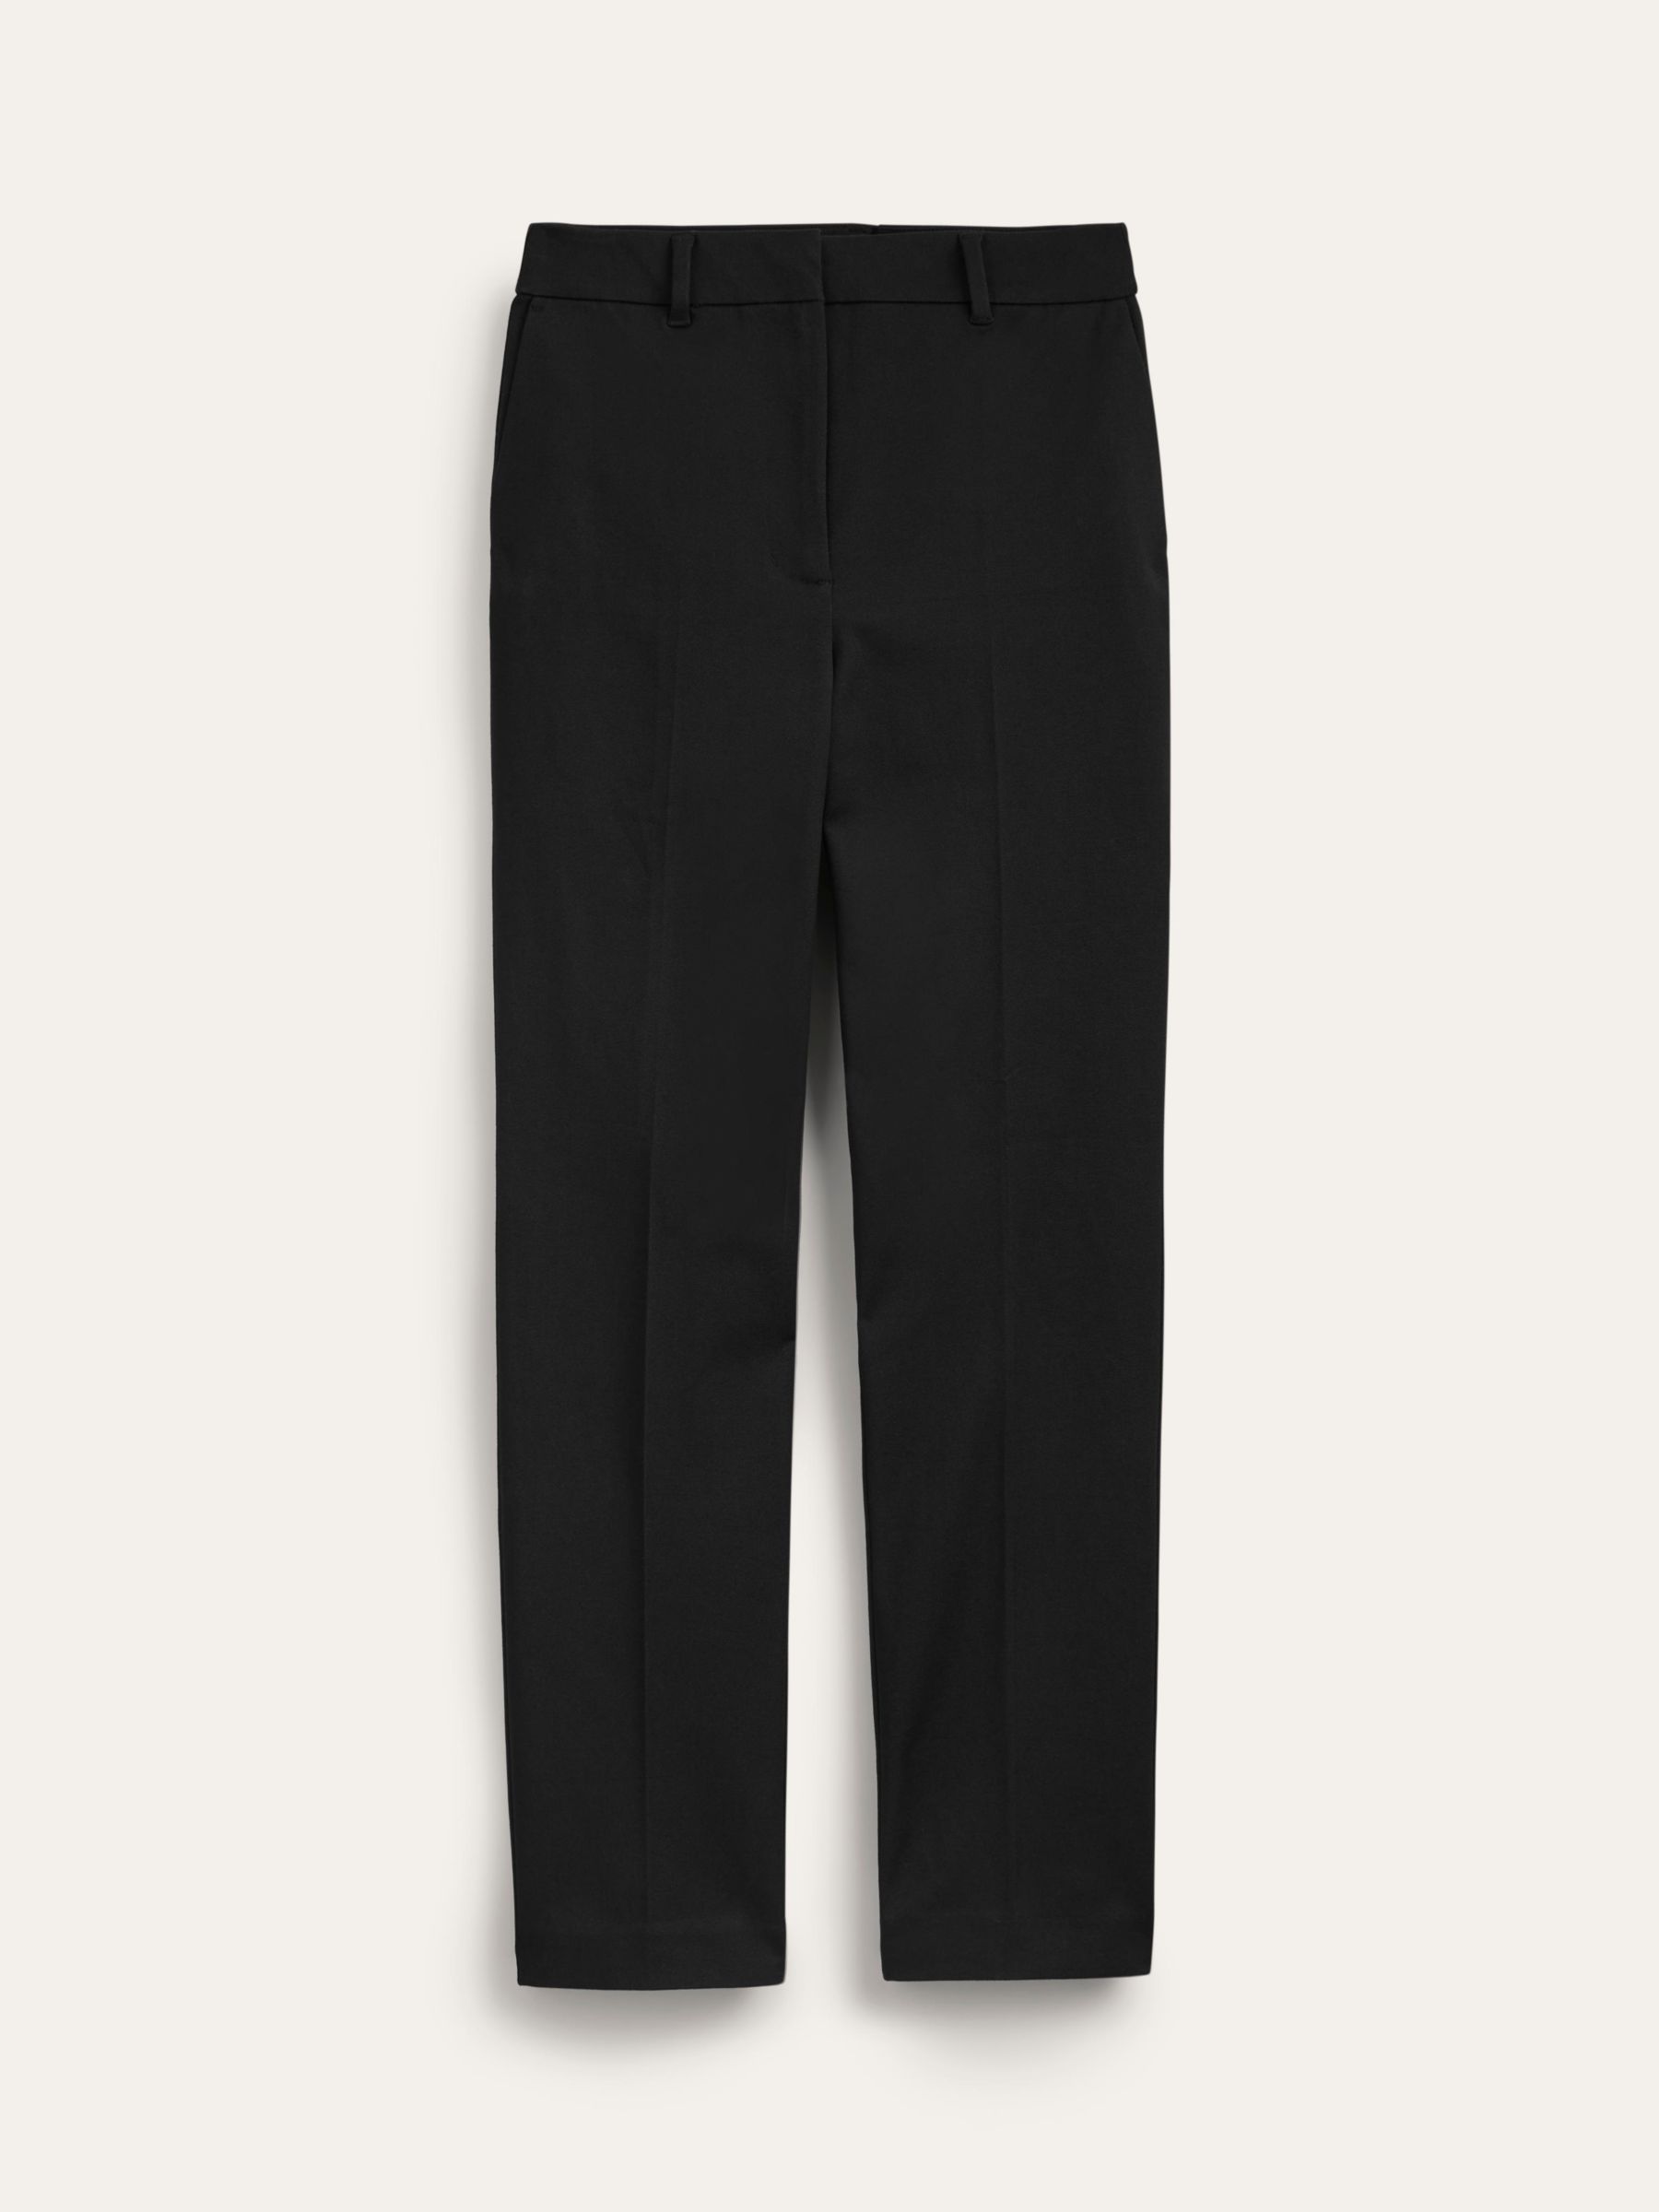 Boden Highgate Bi-Stretch Trousers, Black at John Lewis & Partners